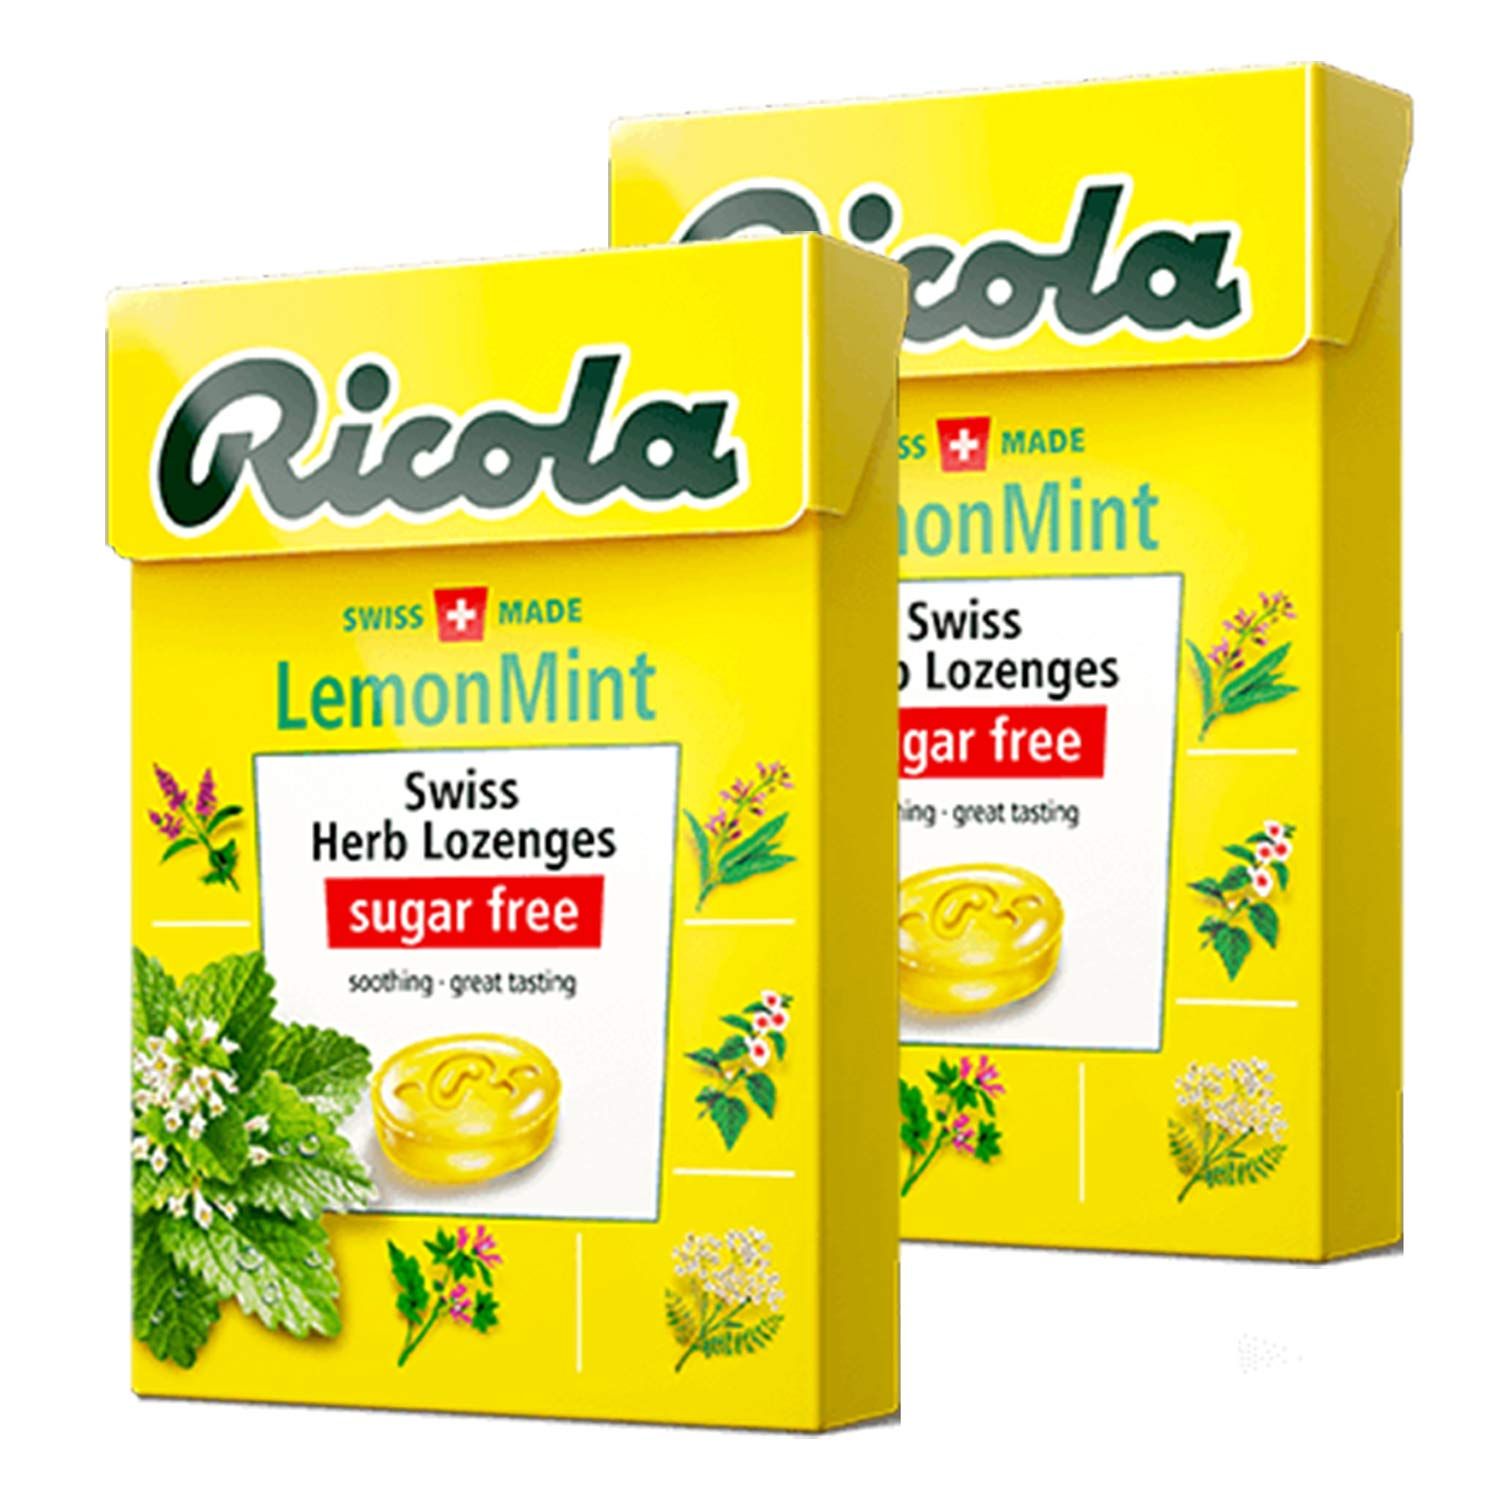 Ricola Lemon Mint Candy Image